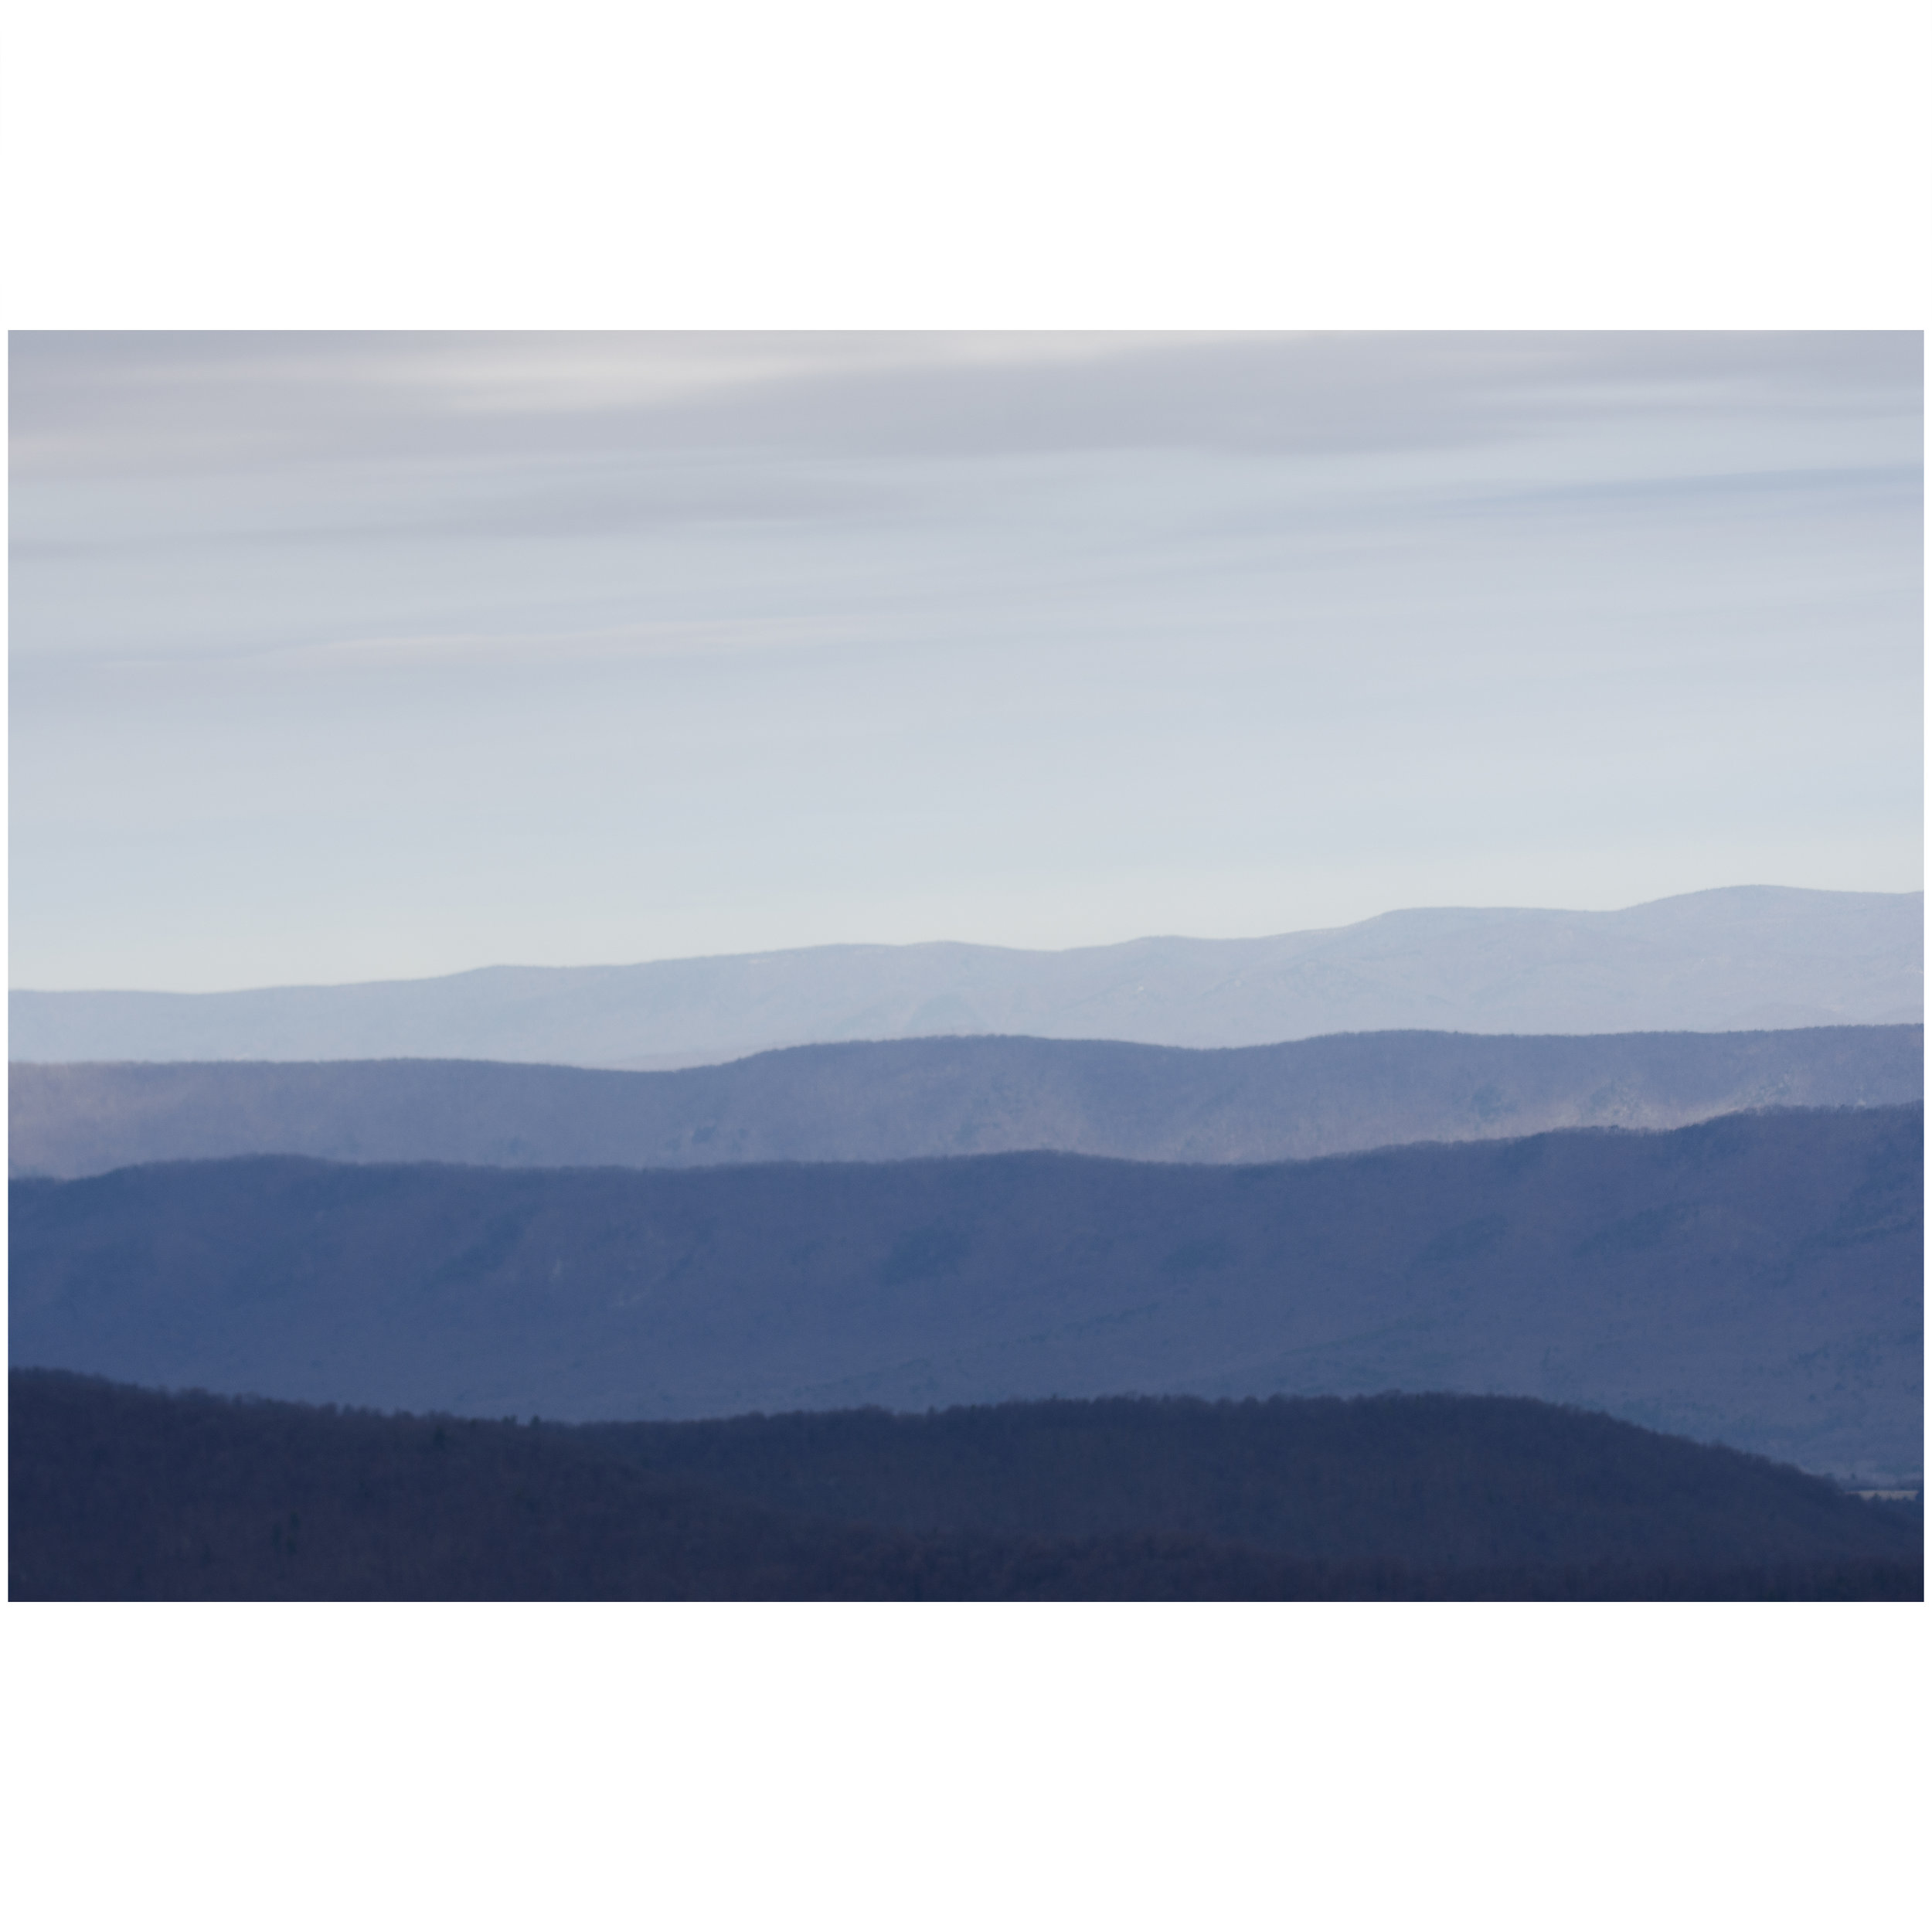  Blue Ridge Mountains, Shenandoah NP 2018 